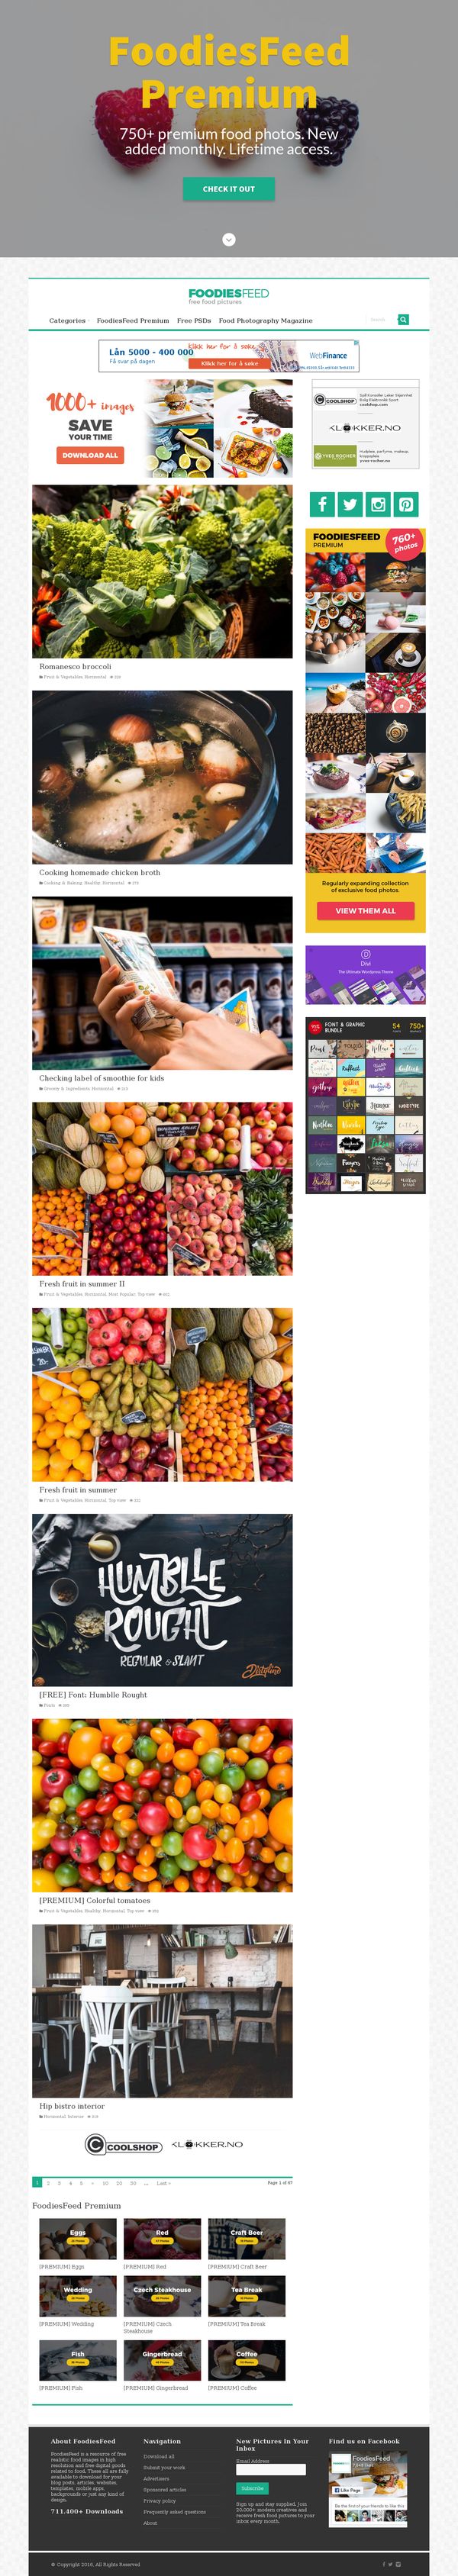 FoodiesFeed - Free Food Images And Digital Goods